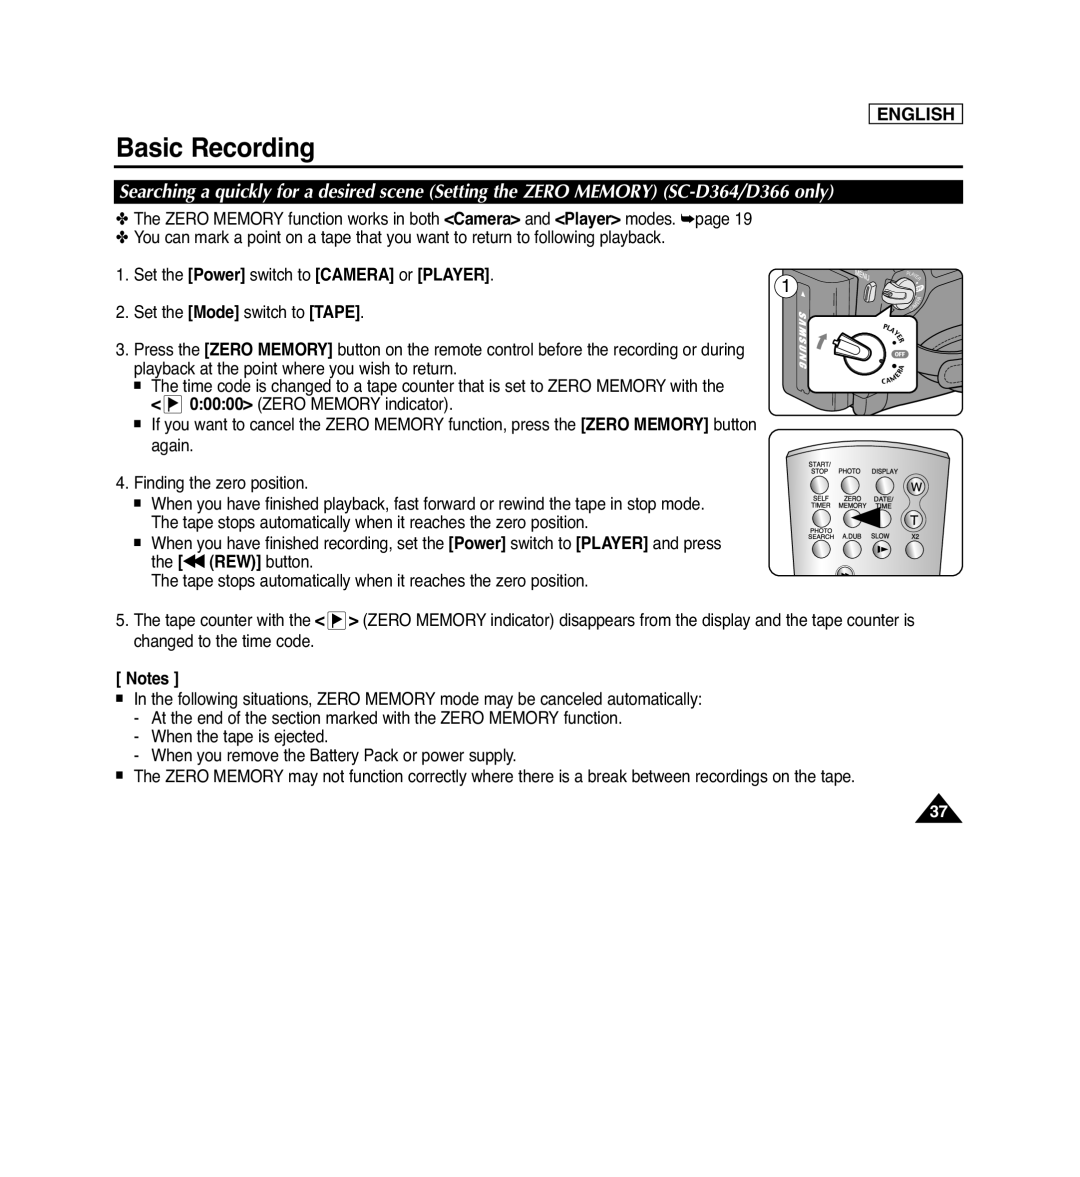 Samsung SC-D366, SC-D263, SC-D364, SC-D362 manual Basic Recording, English 